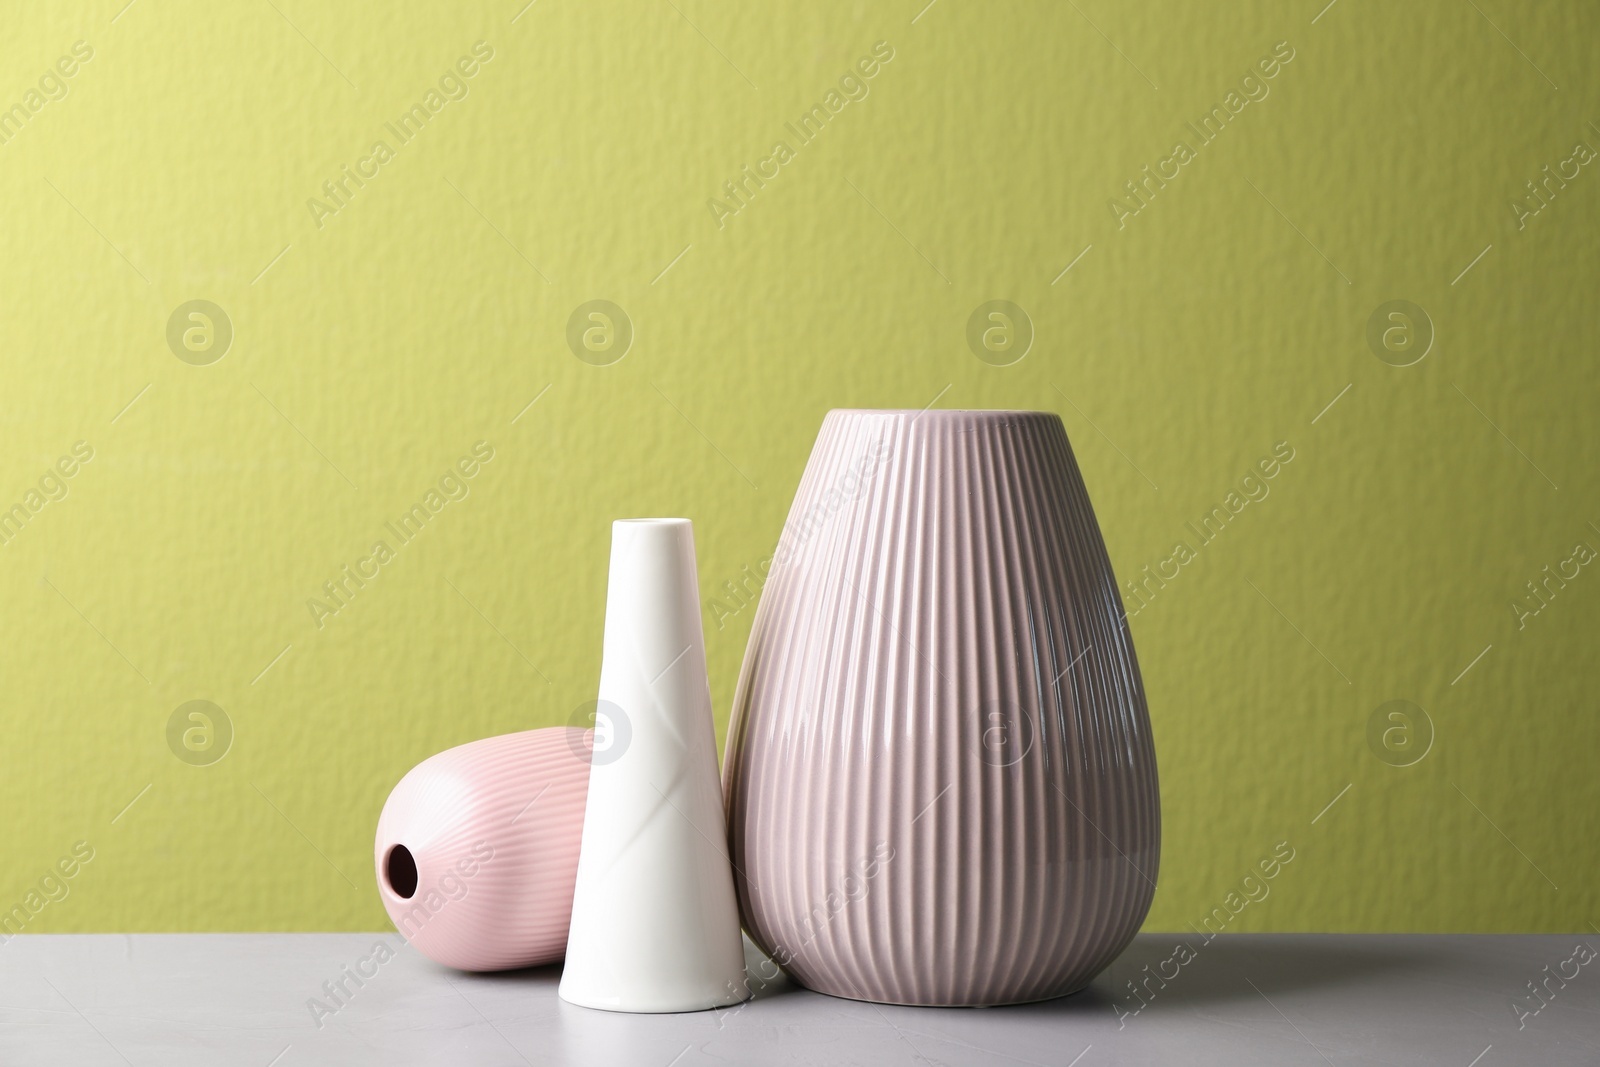 Photo of Stylish ceramic vases on grey stone table against green background